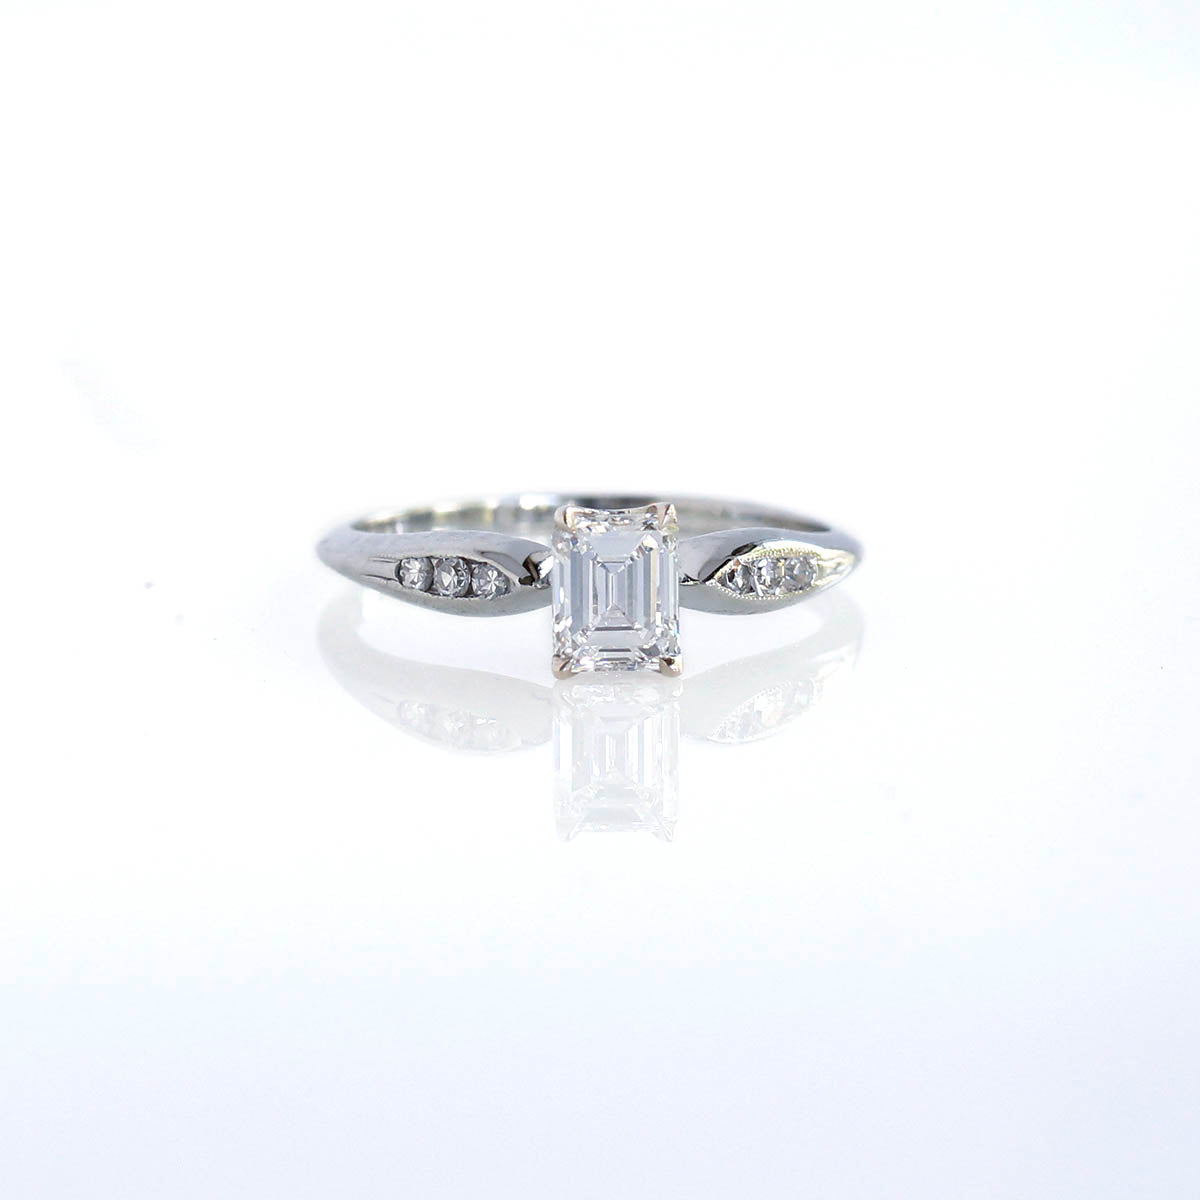 Circa 1940's Emerald Cut Diamond Engagement Ring #VR200812-1